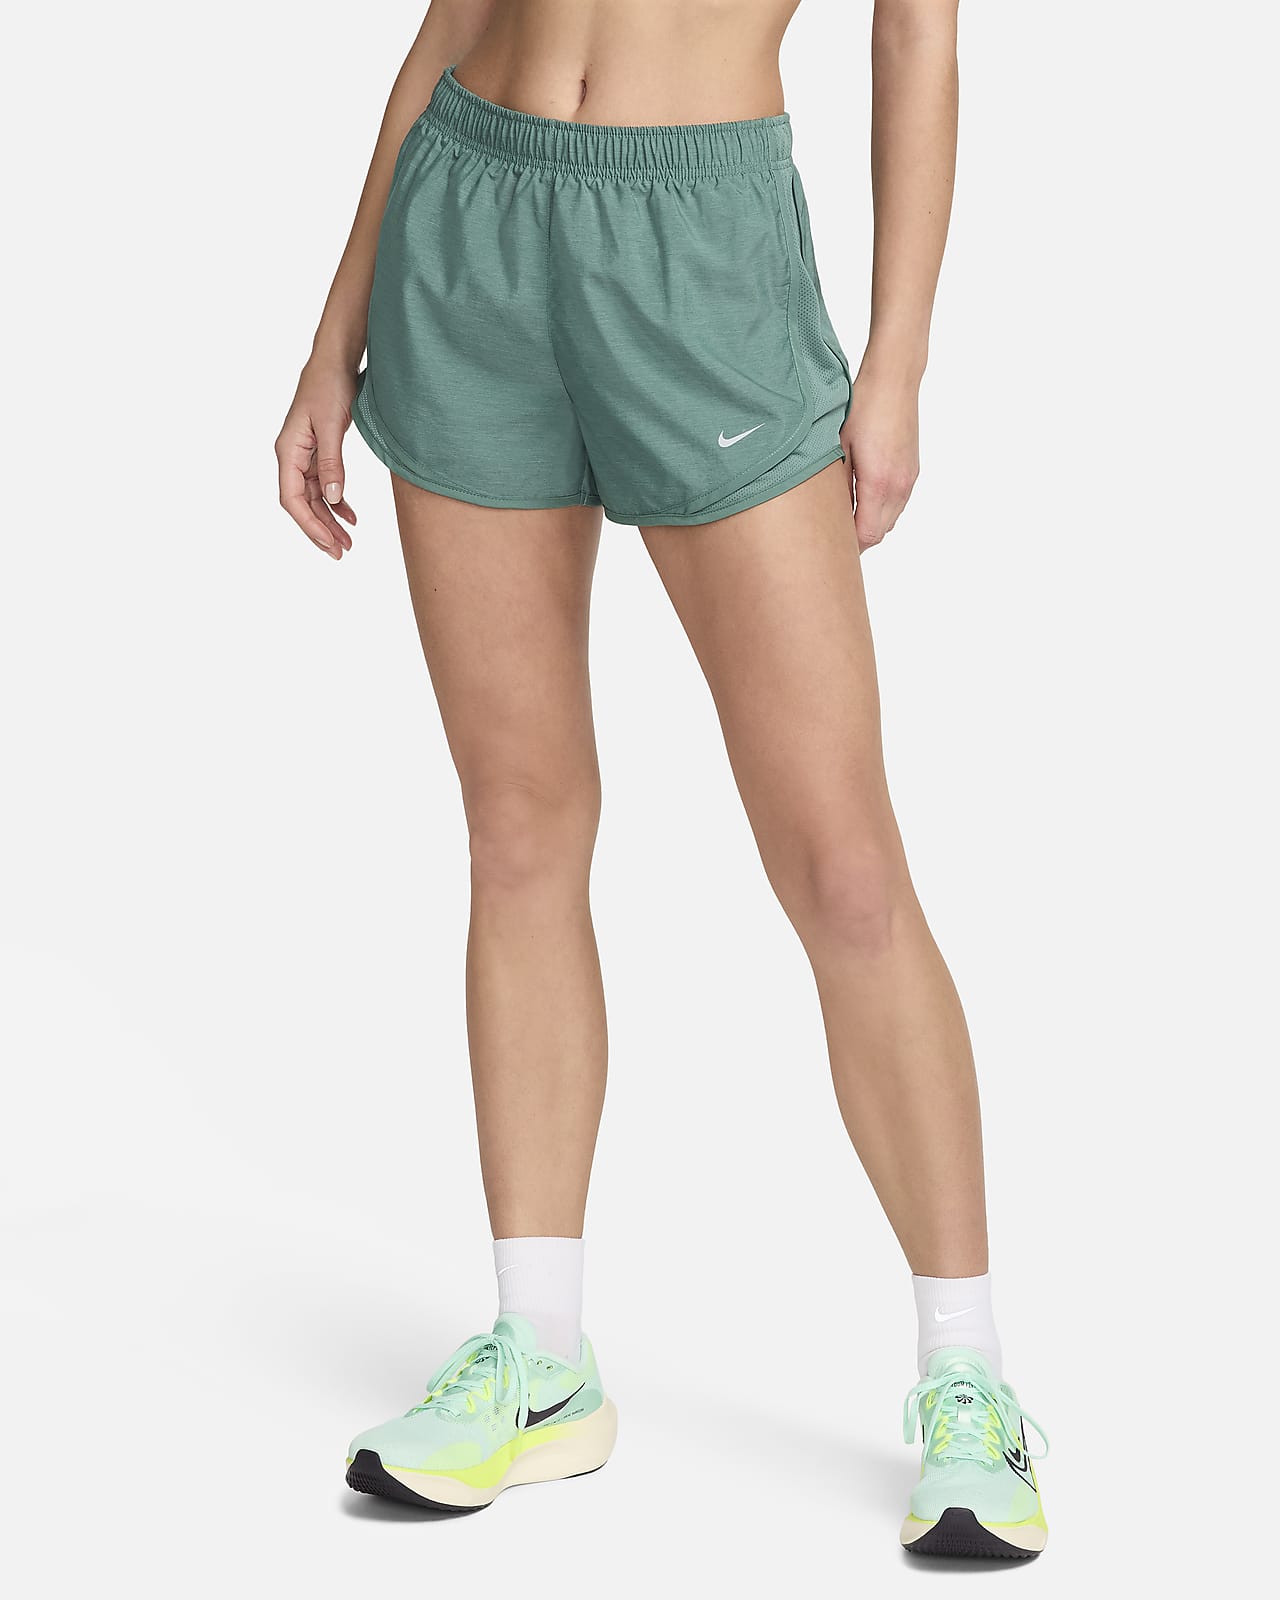 Nike Women's Black/White Nike Tempo Running Shorts $ 30